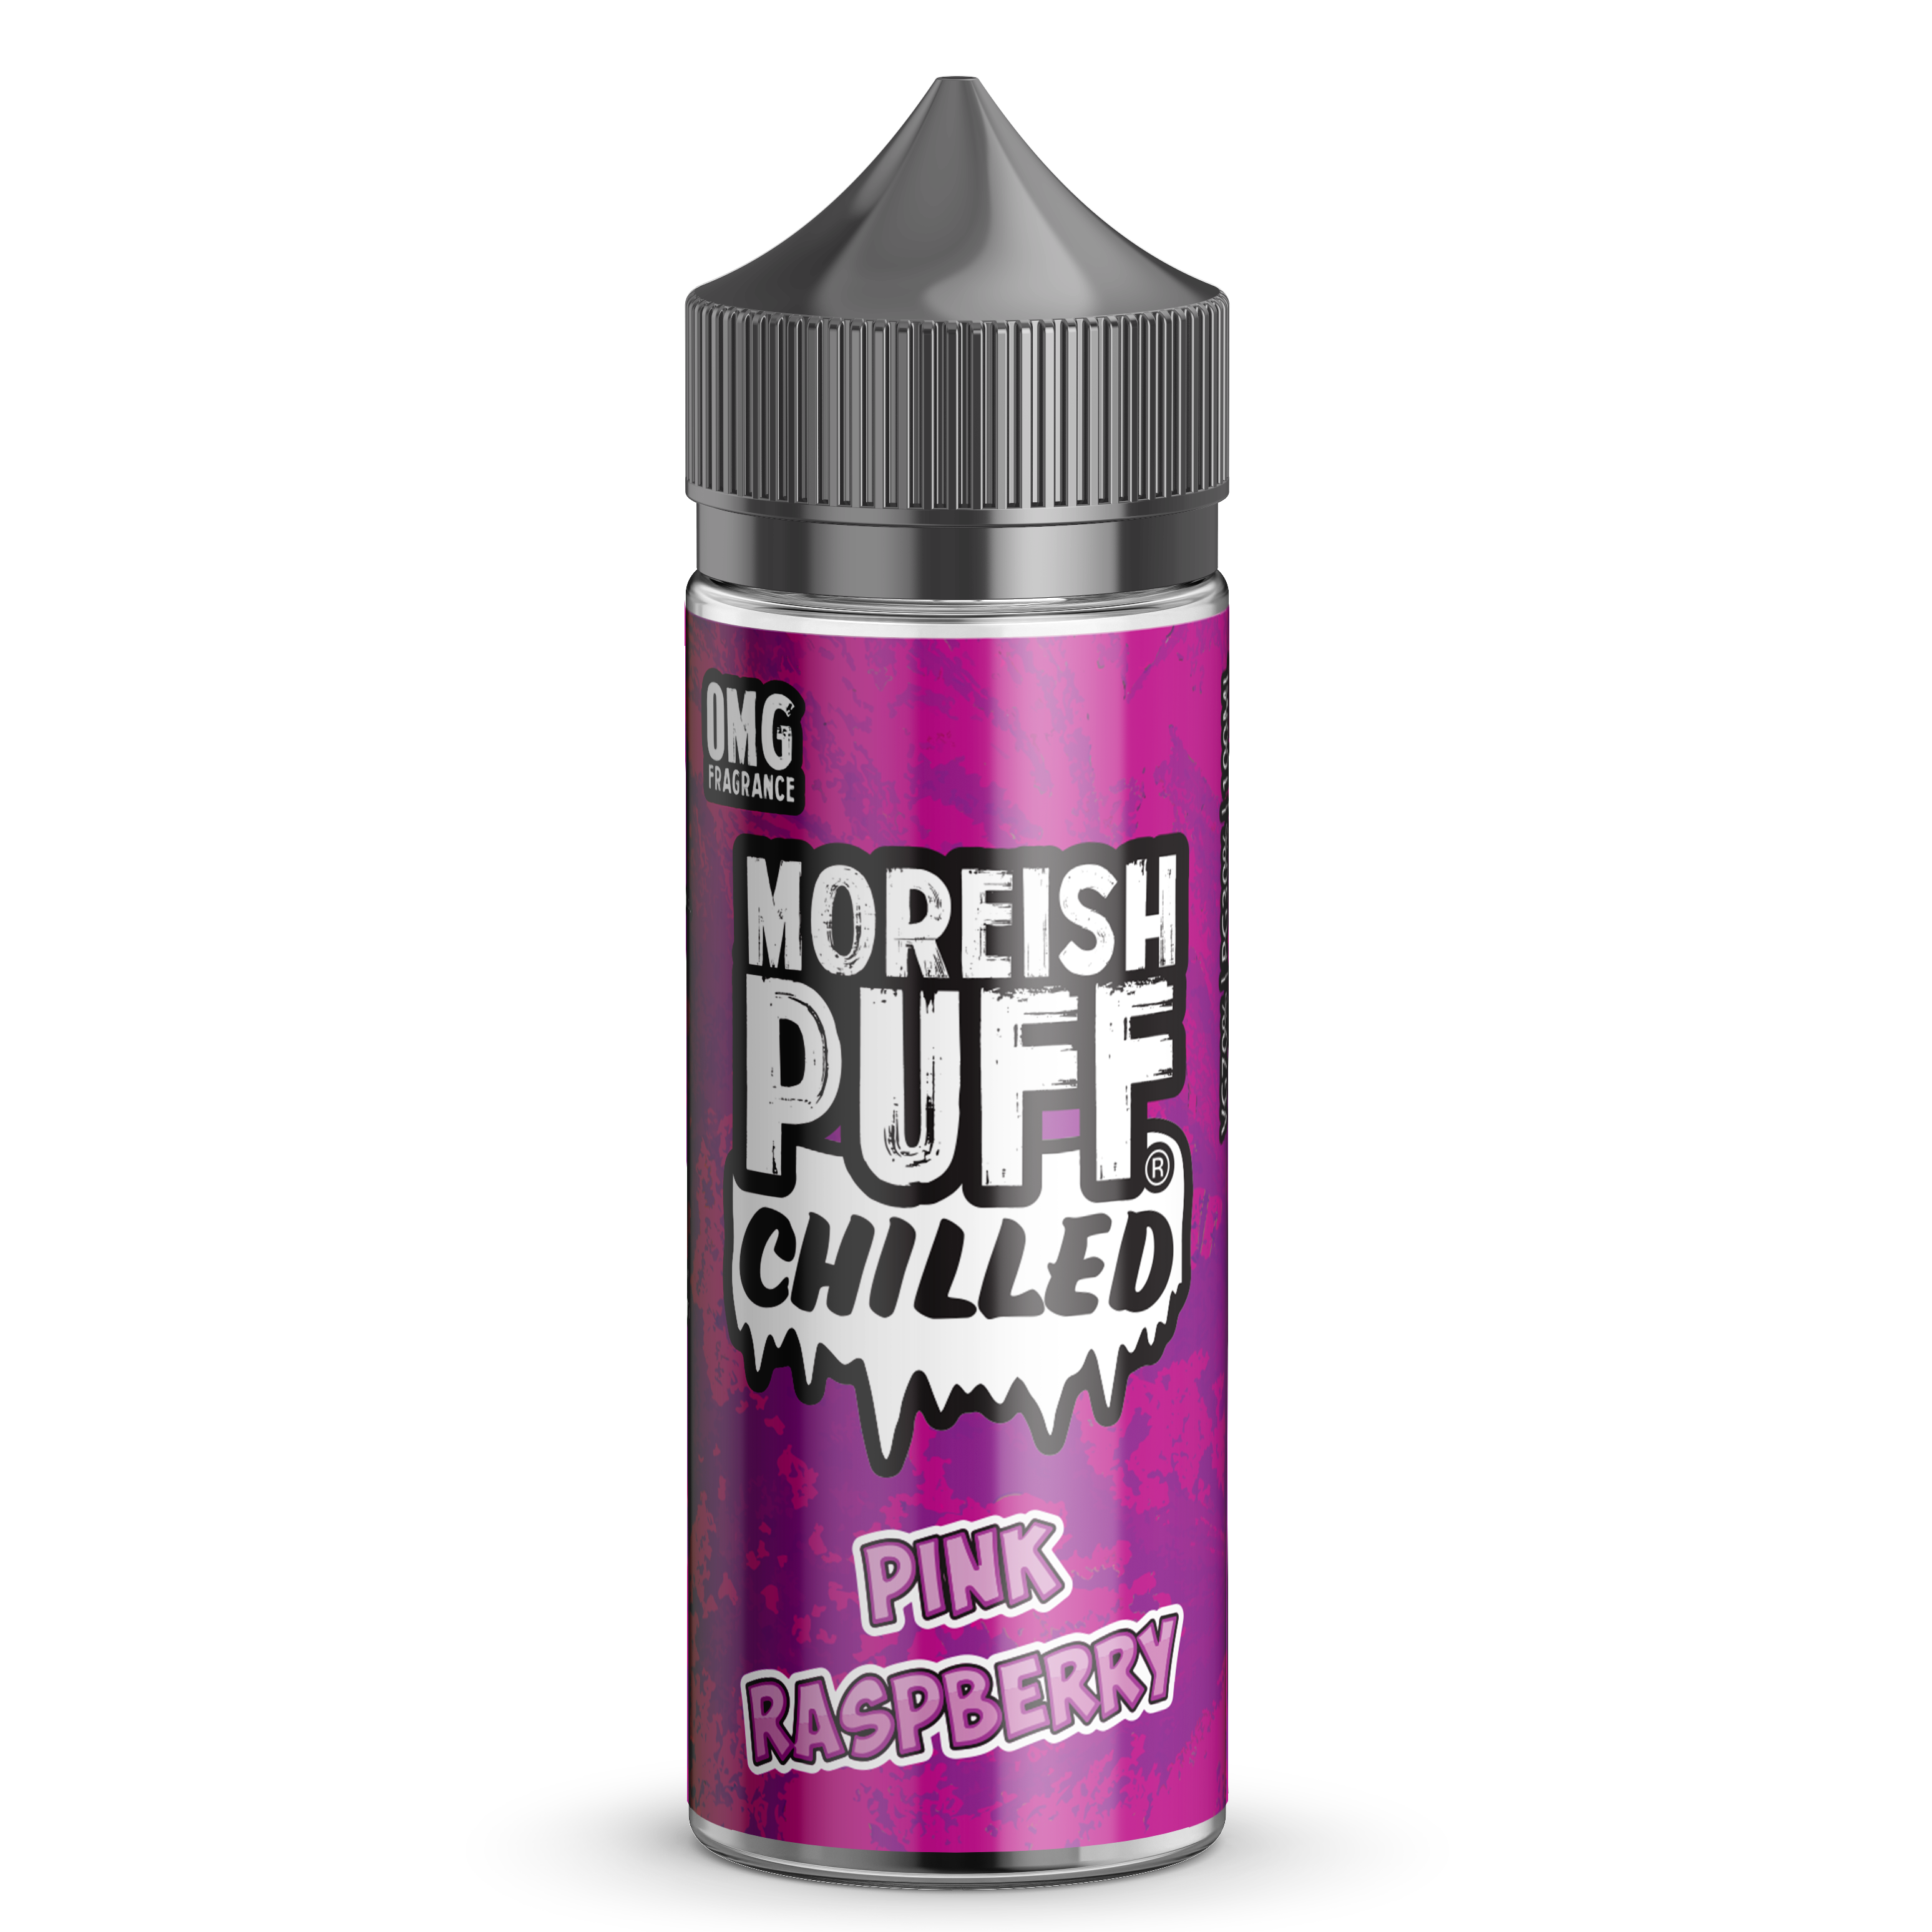 Chilled Pink Raspberry E-Liquid by Moreish Puff 100ml Shortfill